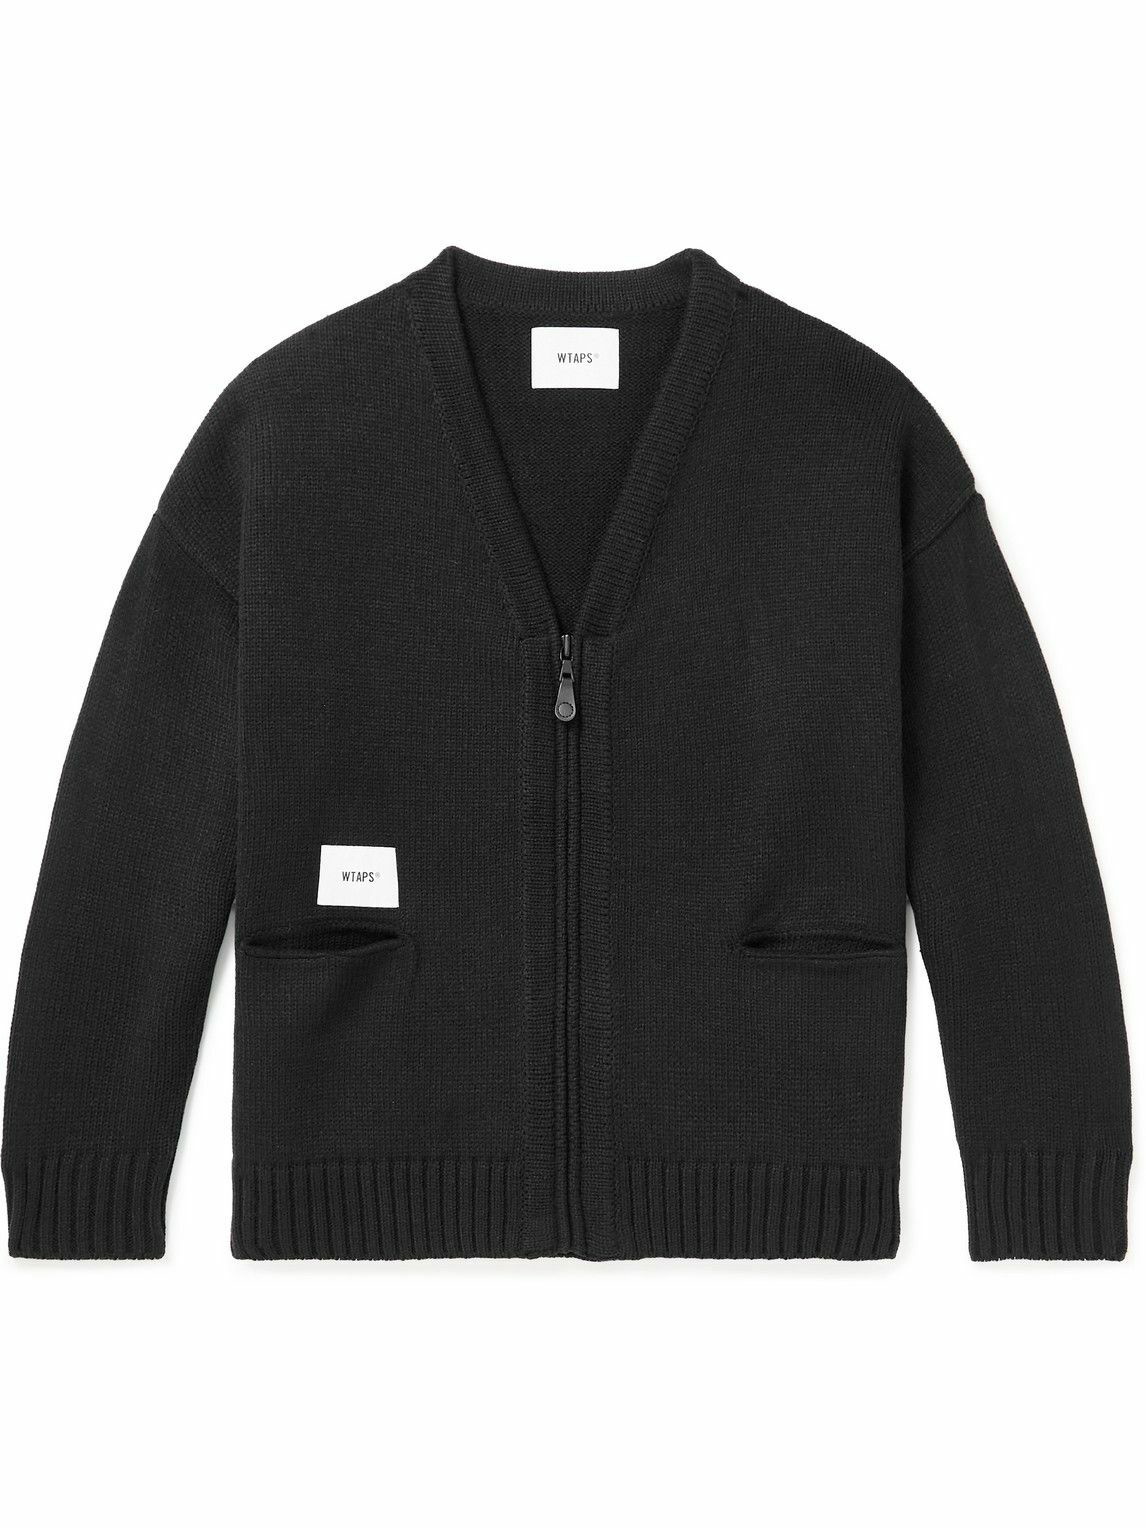 WTAPS - Palmer Knitted Zip-Up Cardigan - Black WTAPS